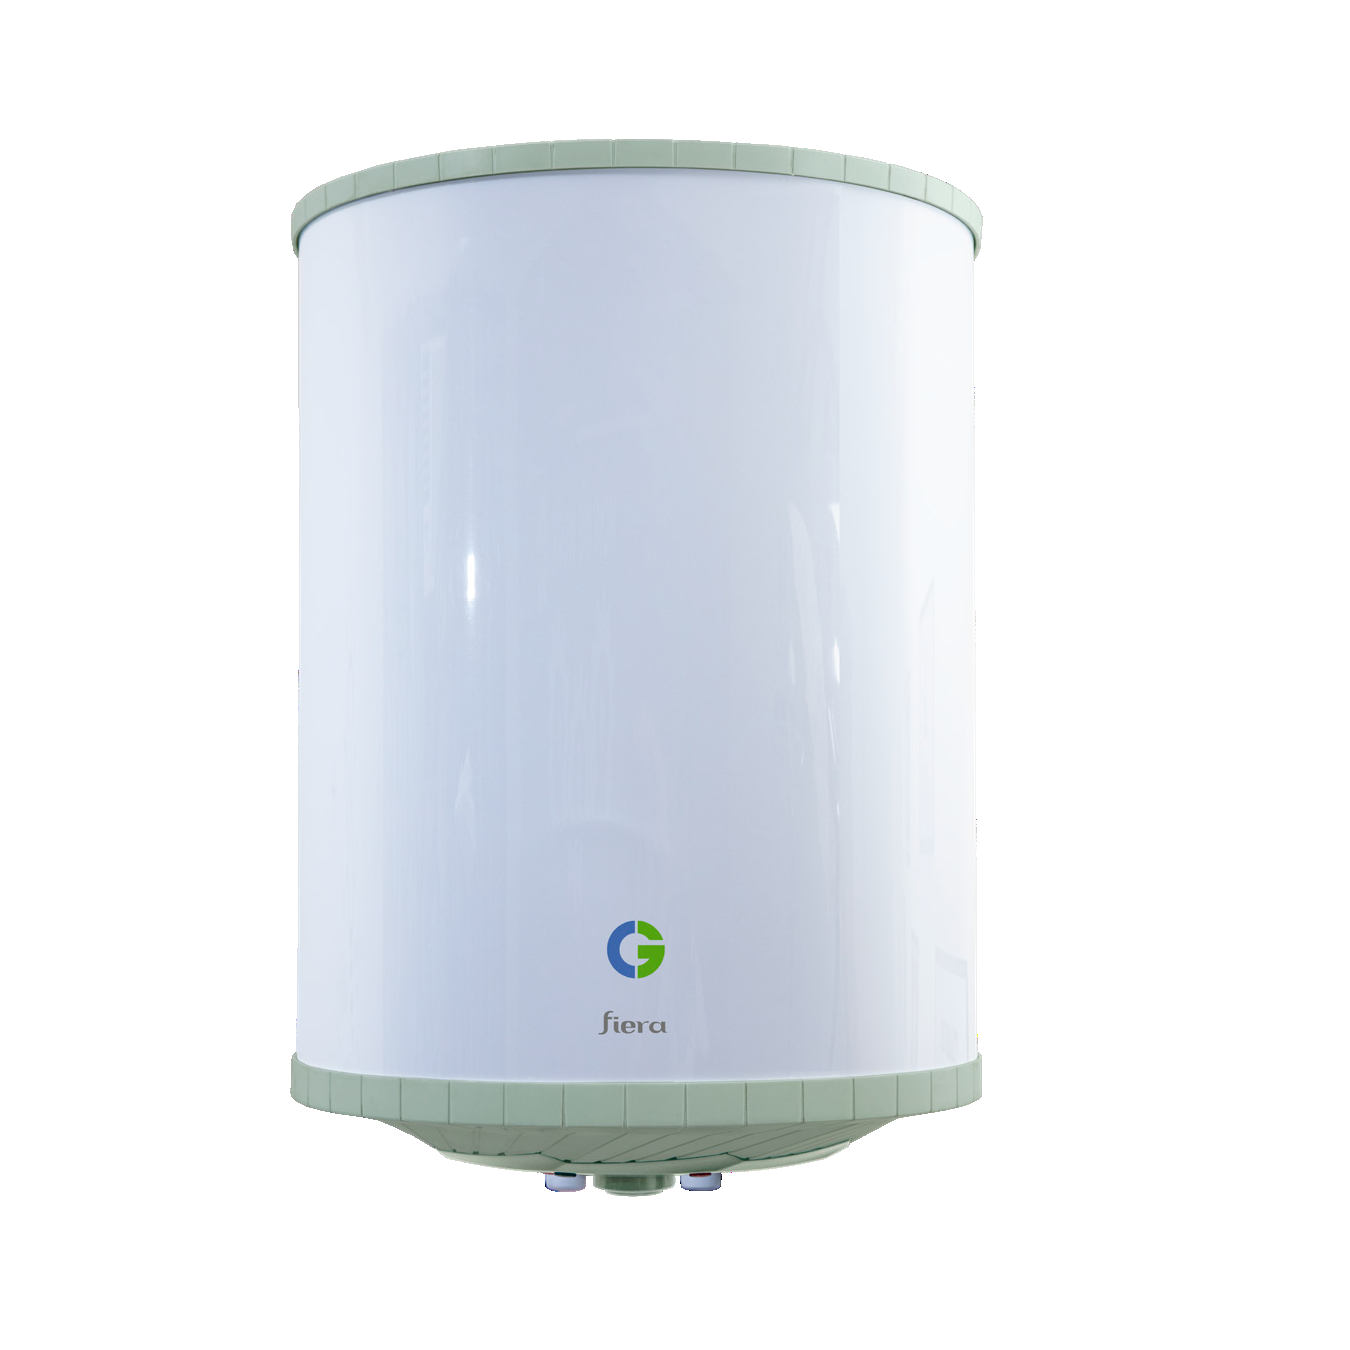 CG Storage Water Heater 6L Capacity 5 Star Rated CG FIERA